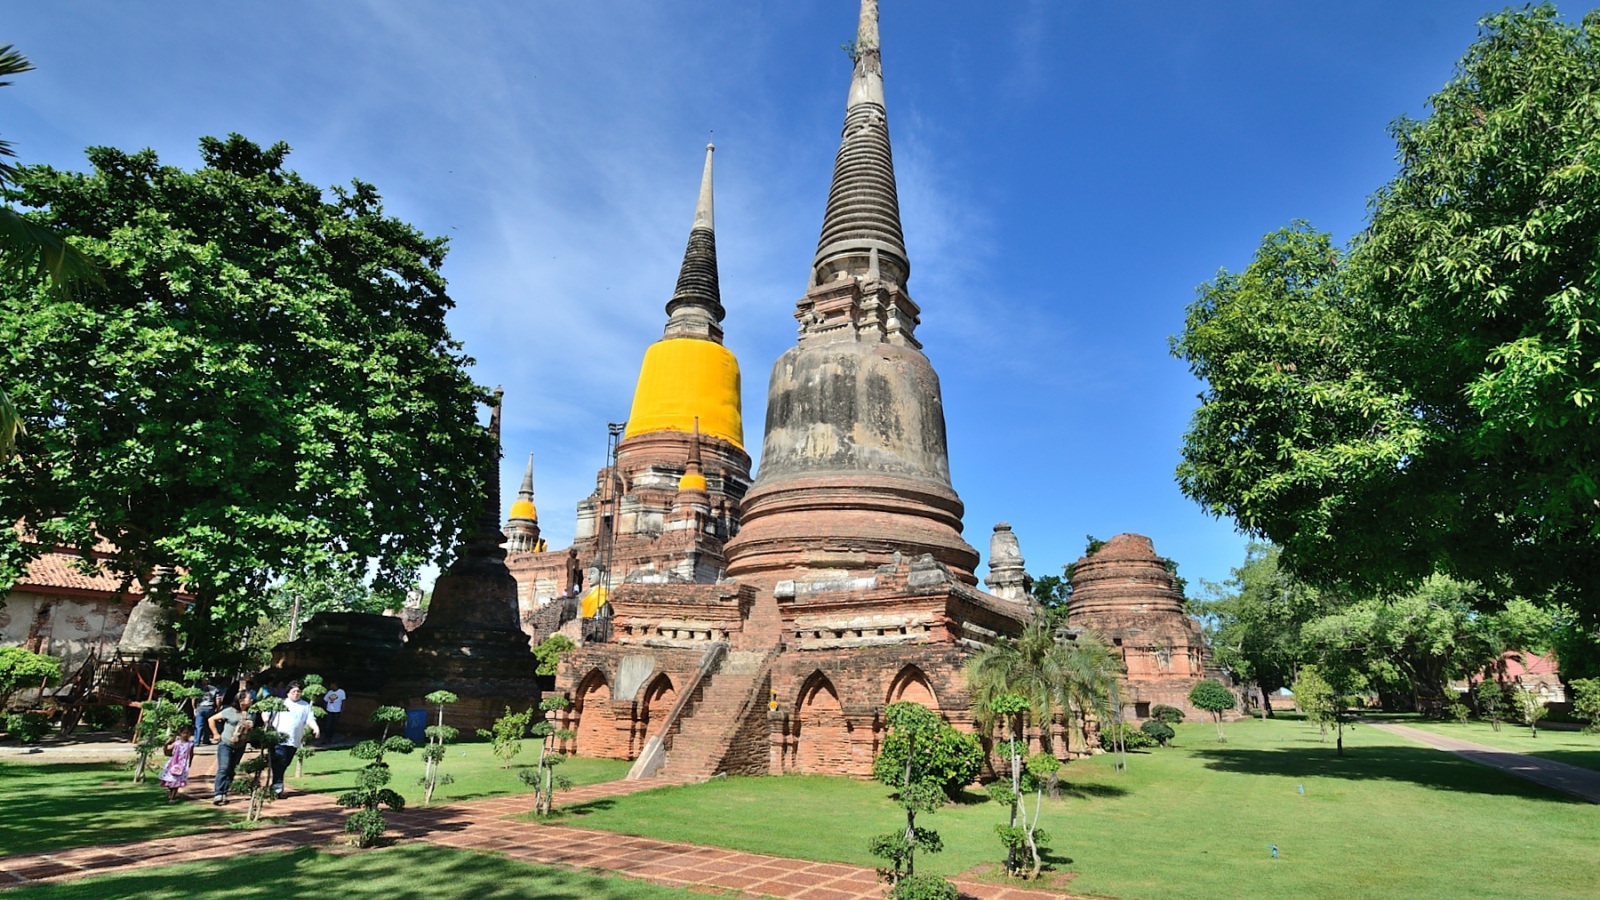 Park at the temple at the resort Ayuthaya, Thailand